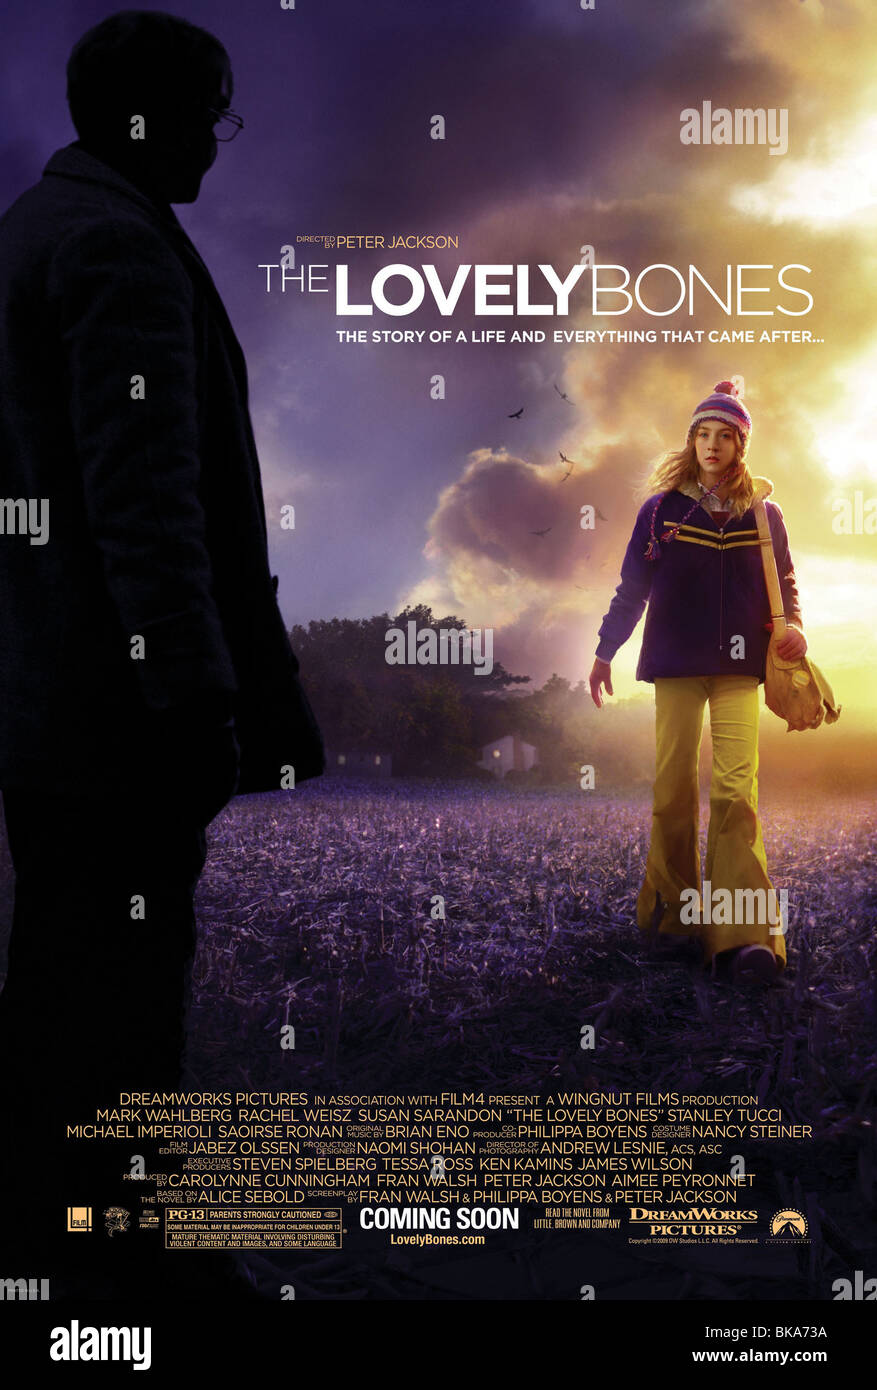 The Lovely Bones Year : 2009 Director : Peter Jackson Saoirse Ronan Movie  poster (USA Stock Photo - Alamy